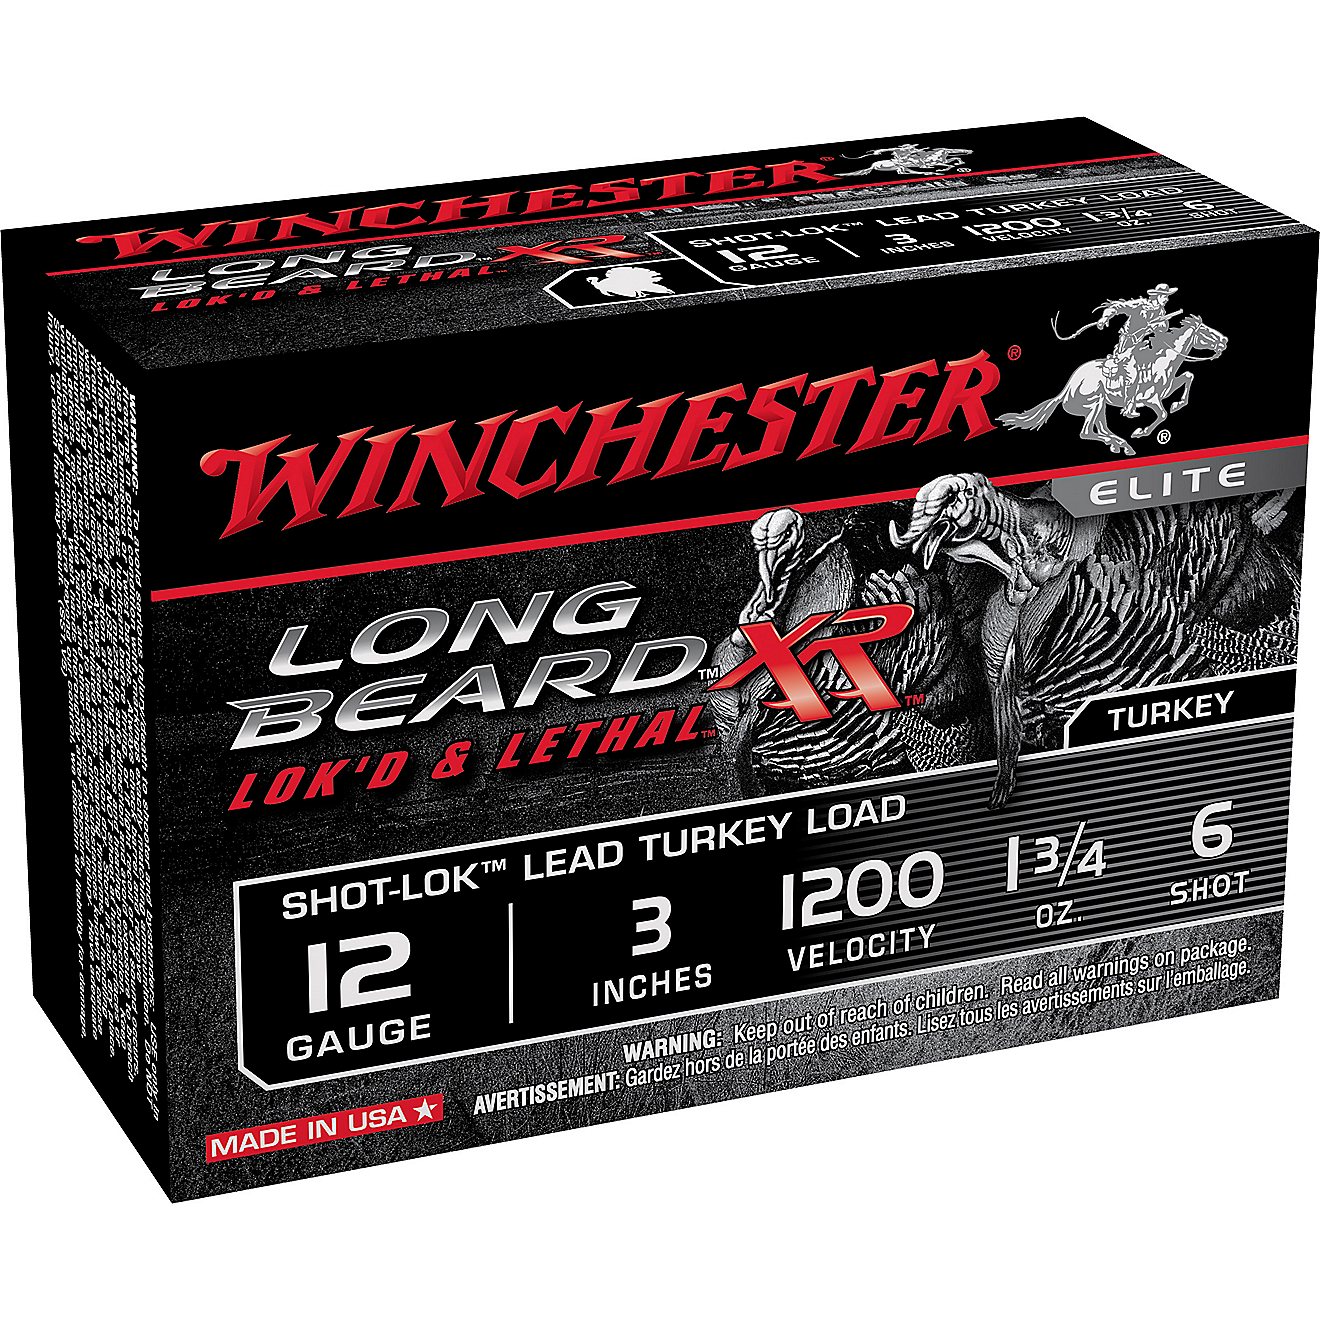 Winchester Long Beard XR 12 Gauge 3 inches 6 Shot Shotshells                                                                     - view number 1